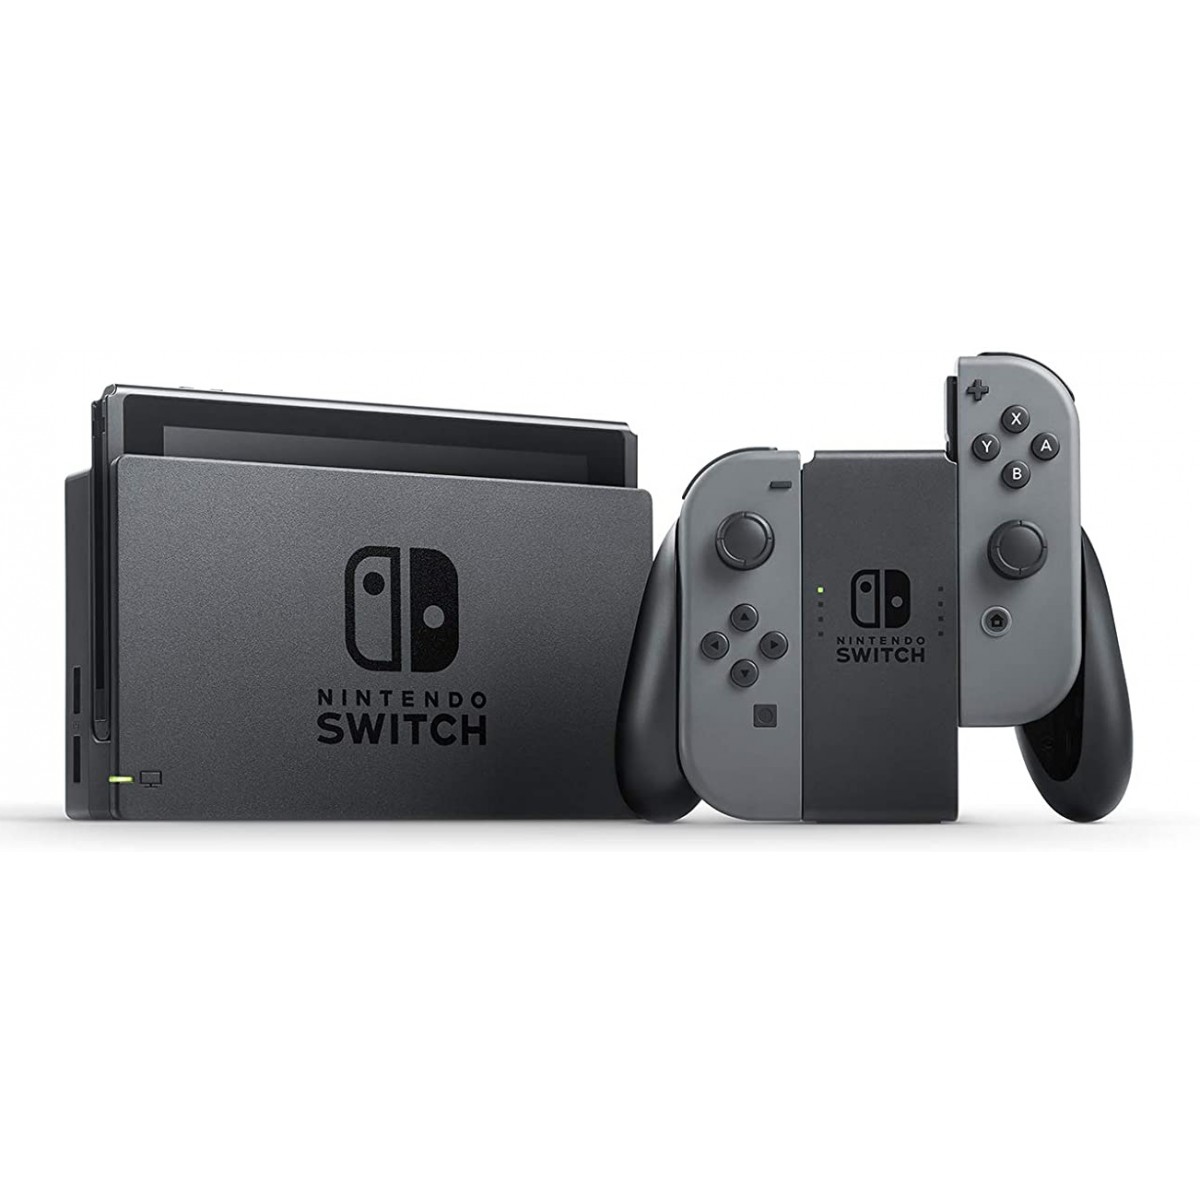 Console Nintendo Switch, 32GB, 1x Joycon, (Modelo Novo), Grey, HADSKAAA1